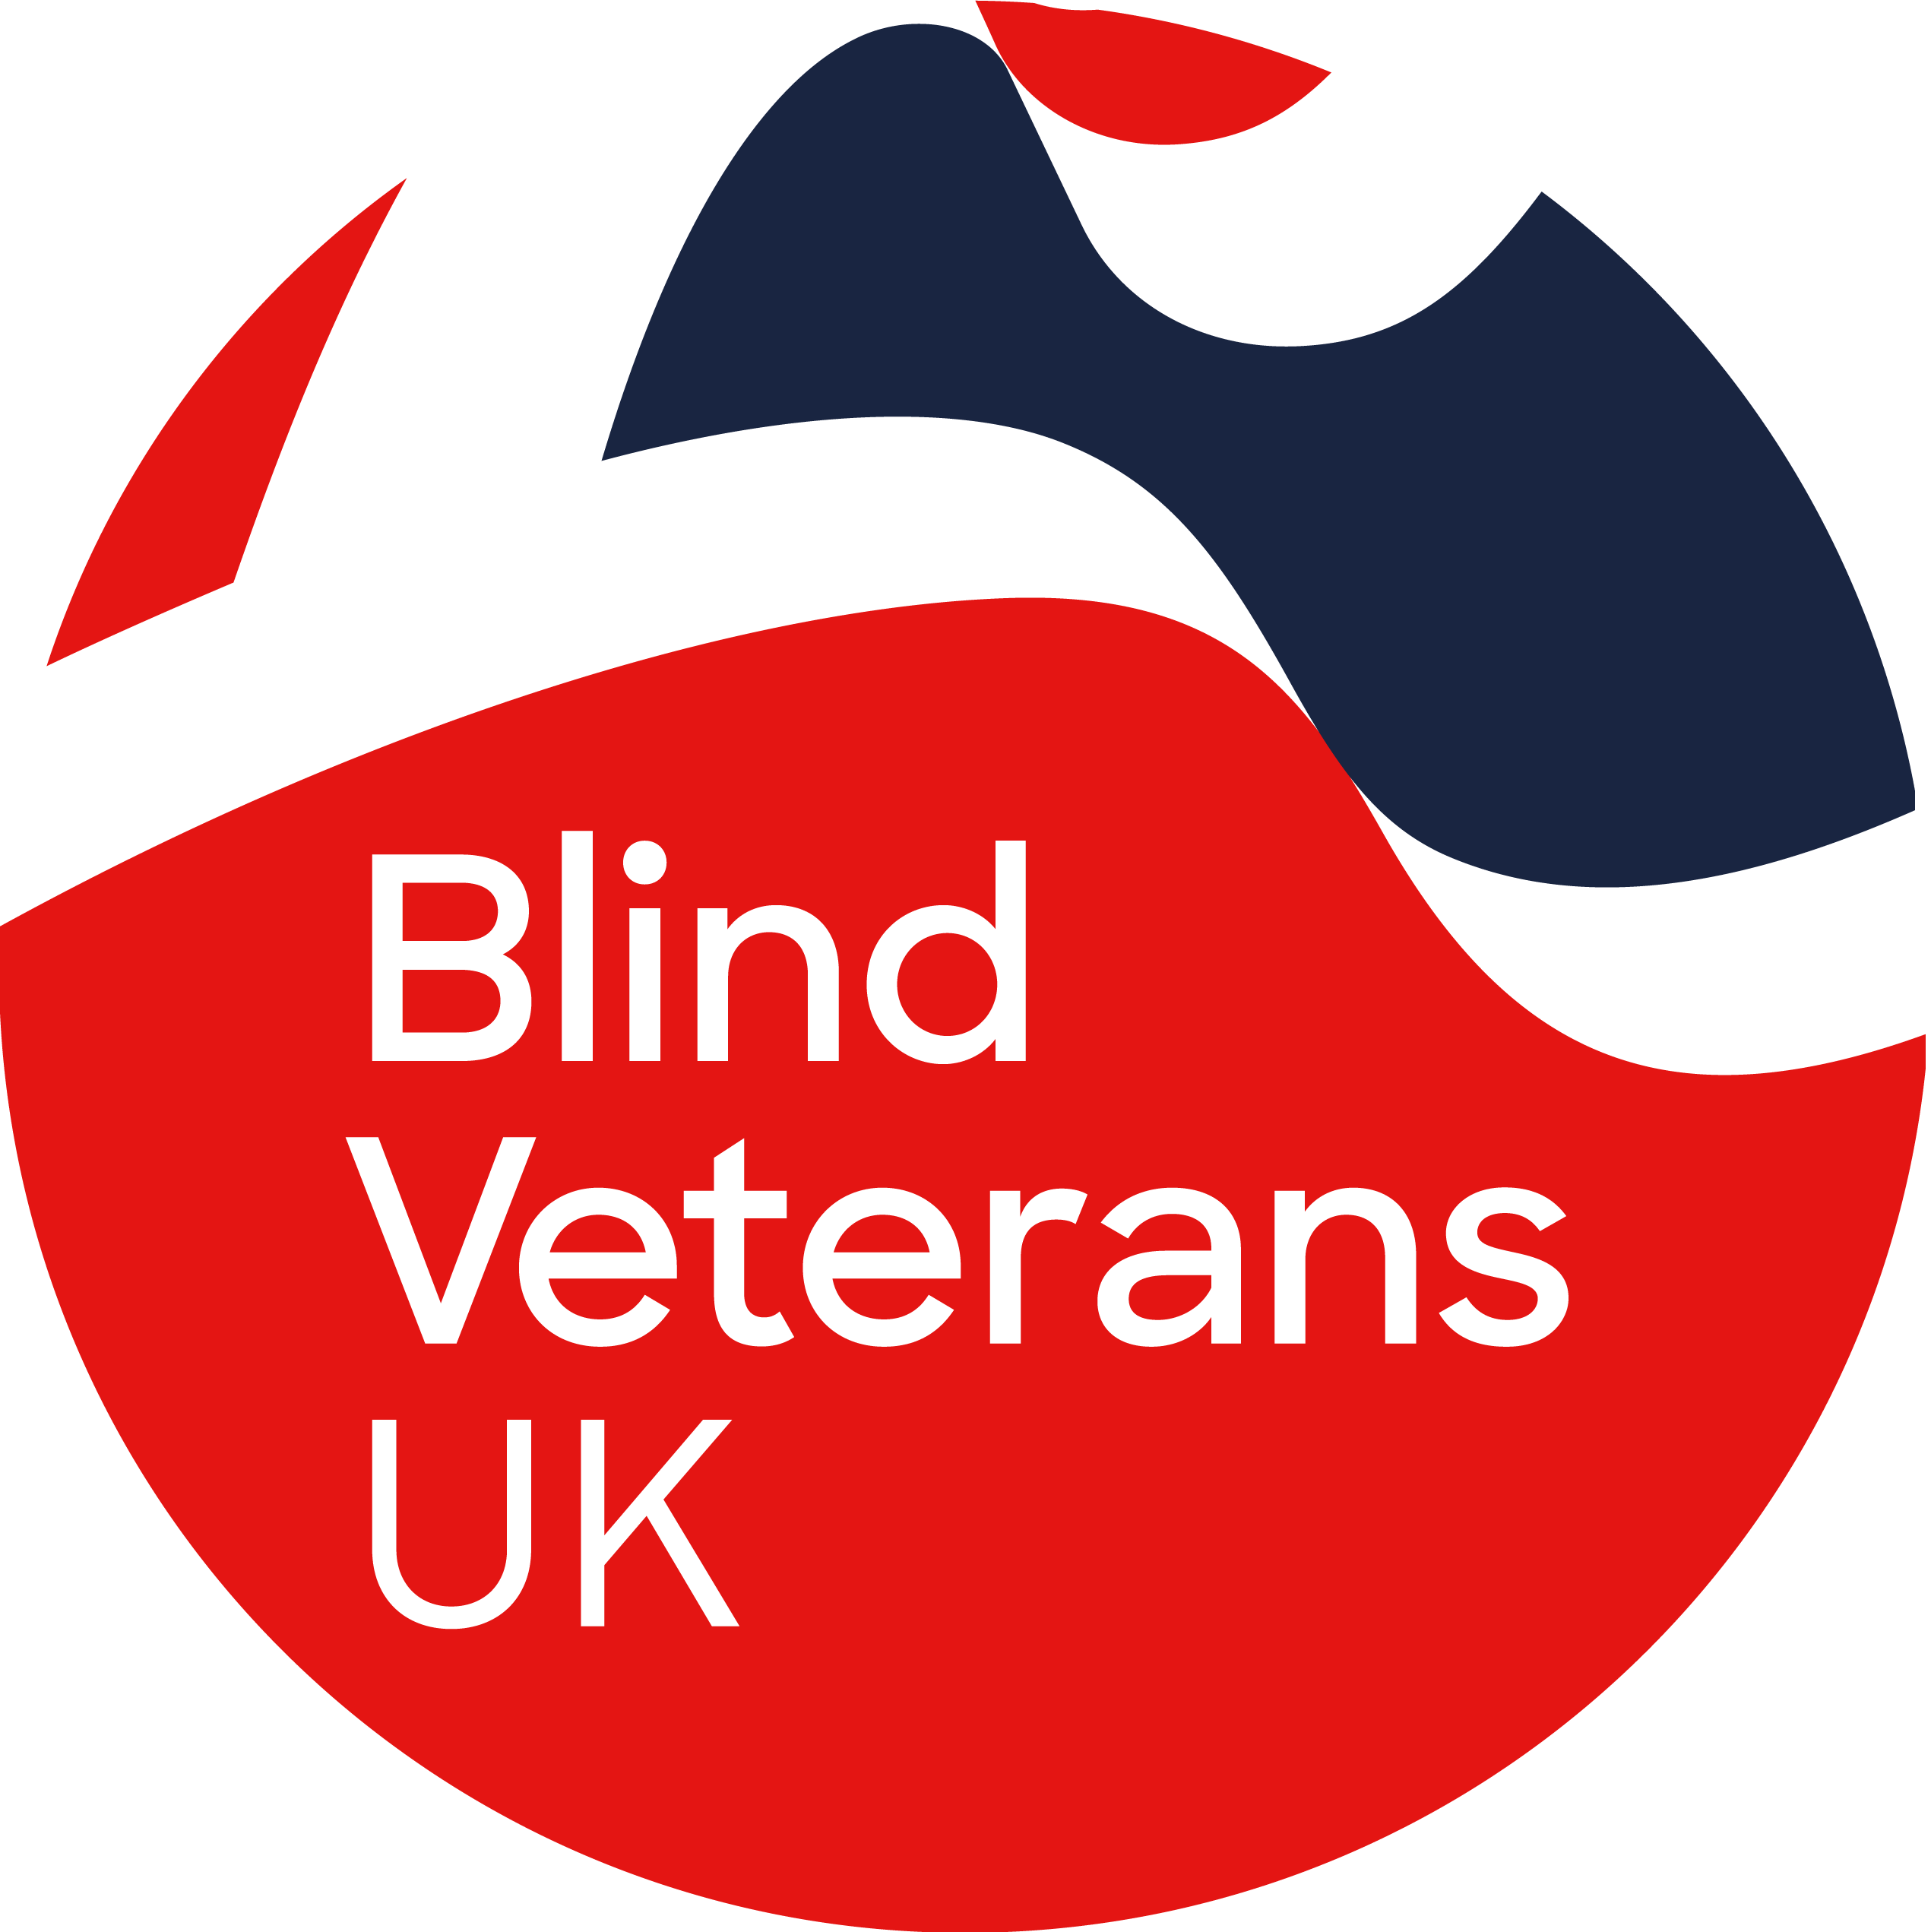 Blind Veterans UK circular logo